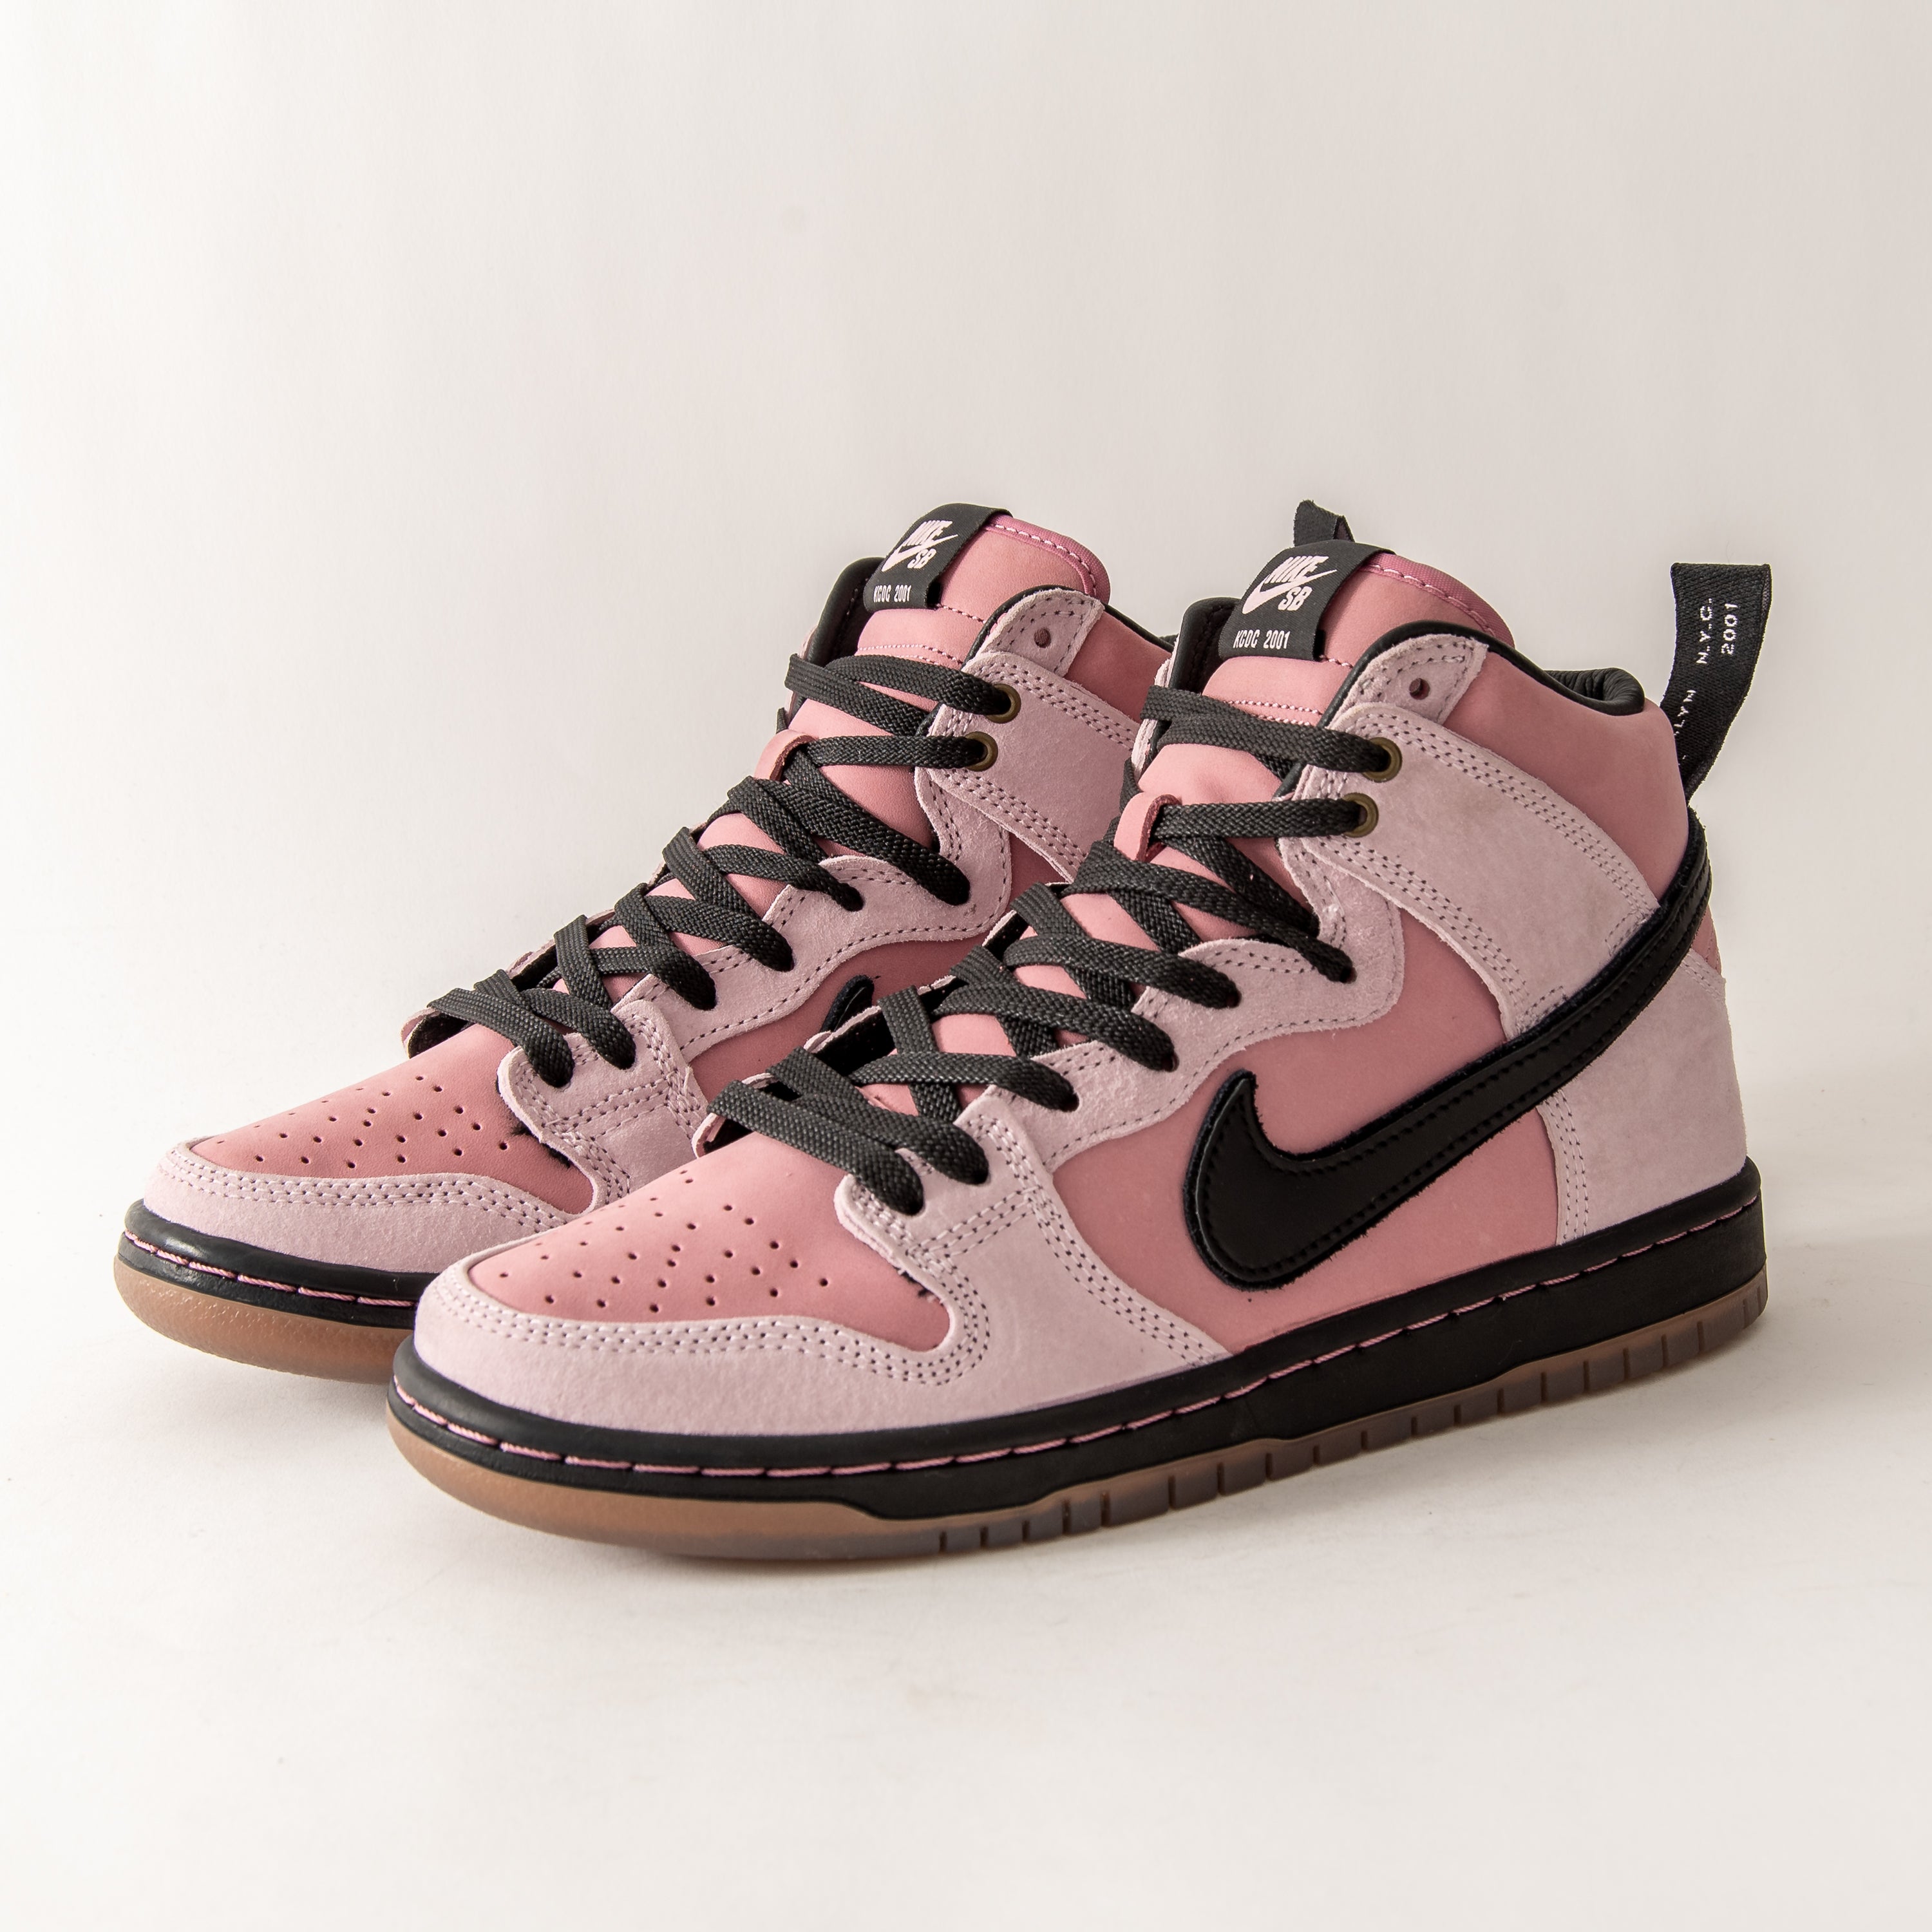 Nike SB - Dunk High Pro QS (Elemental Pink/Black)